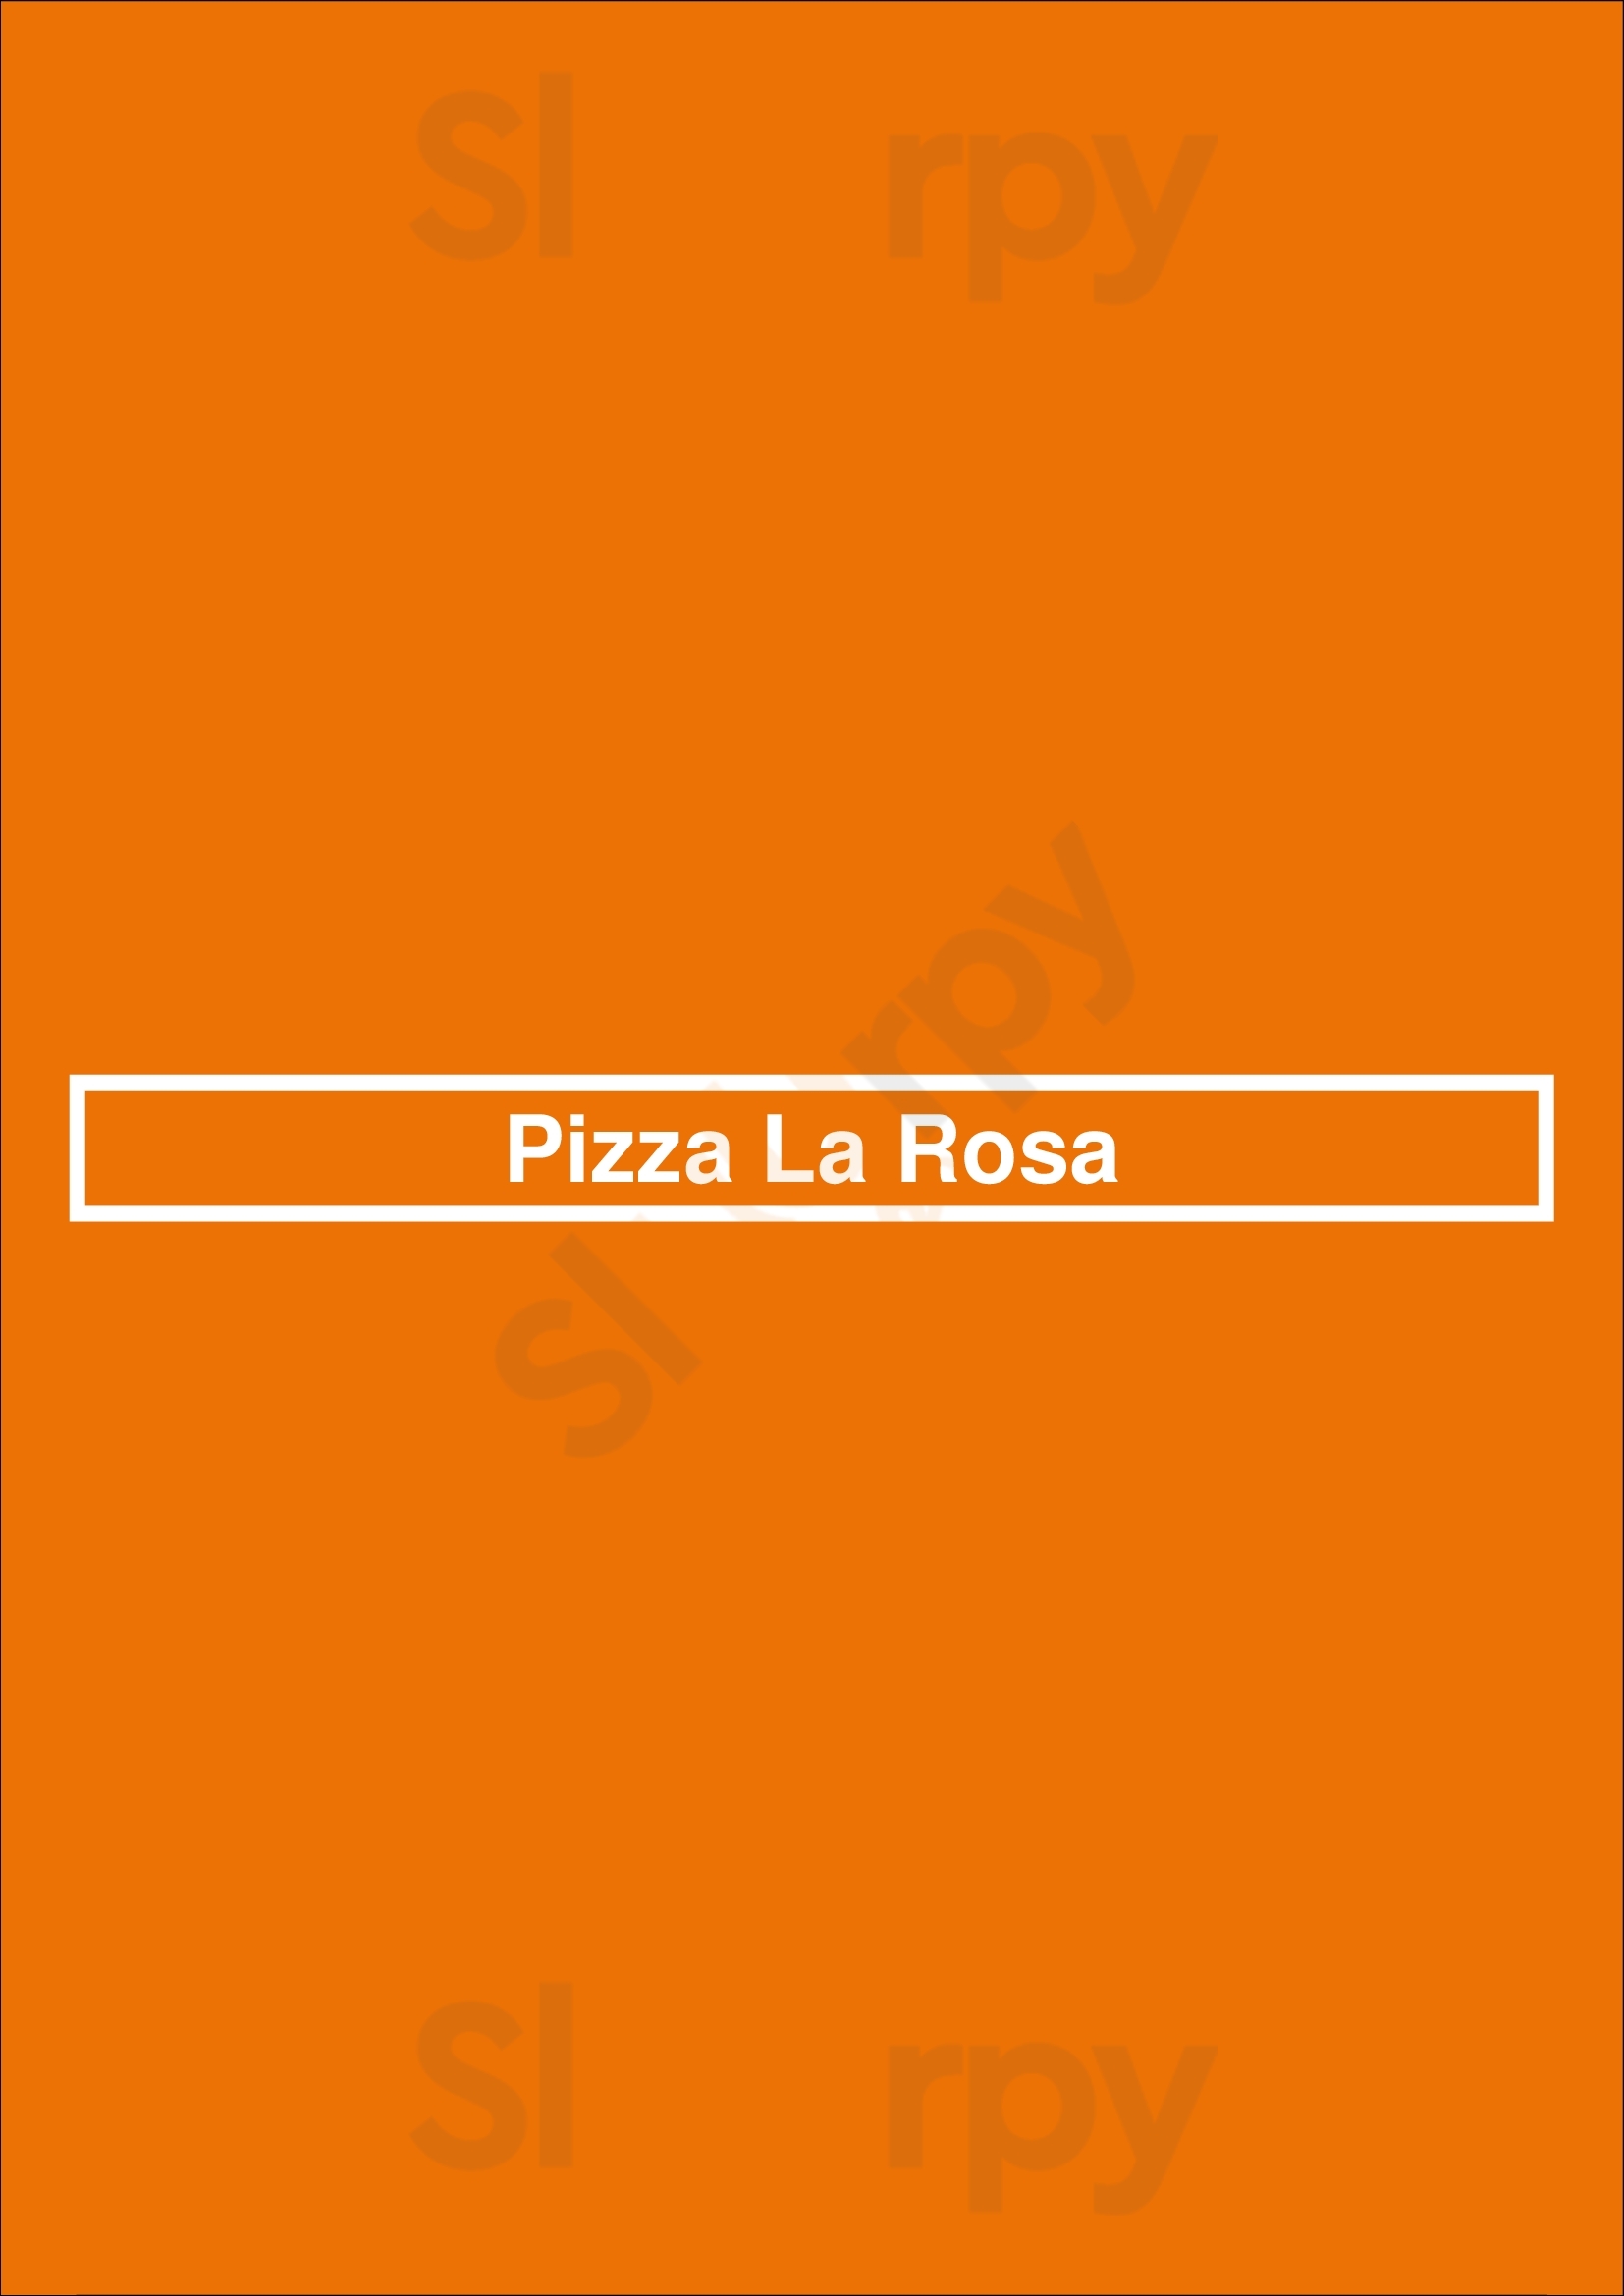 Pizza La Rosa Toronto Menu - 1